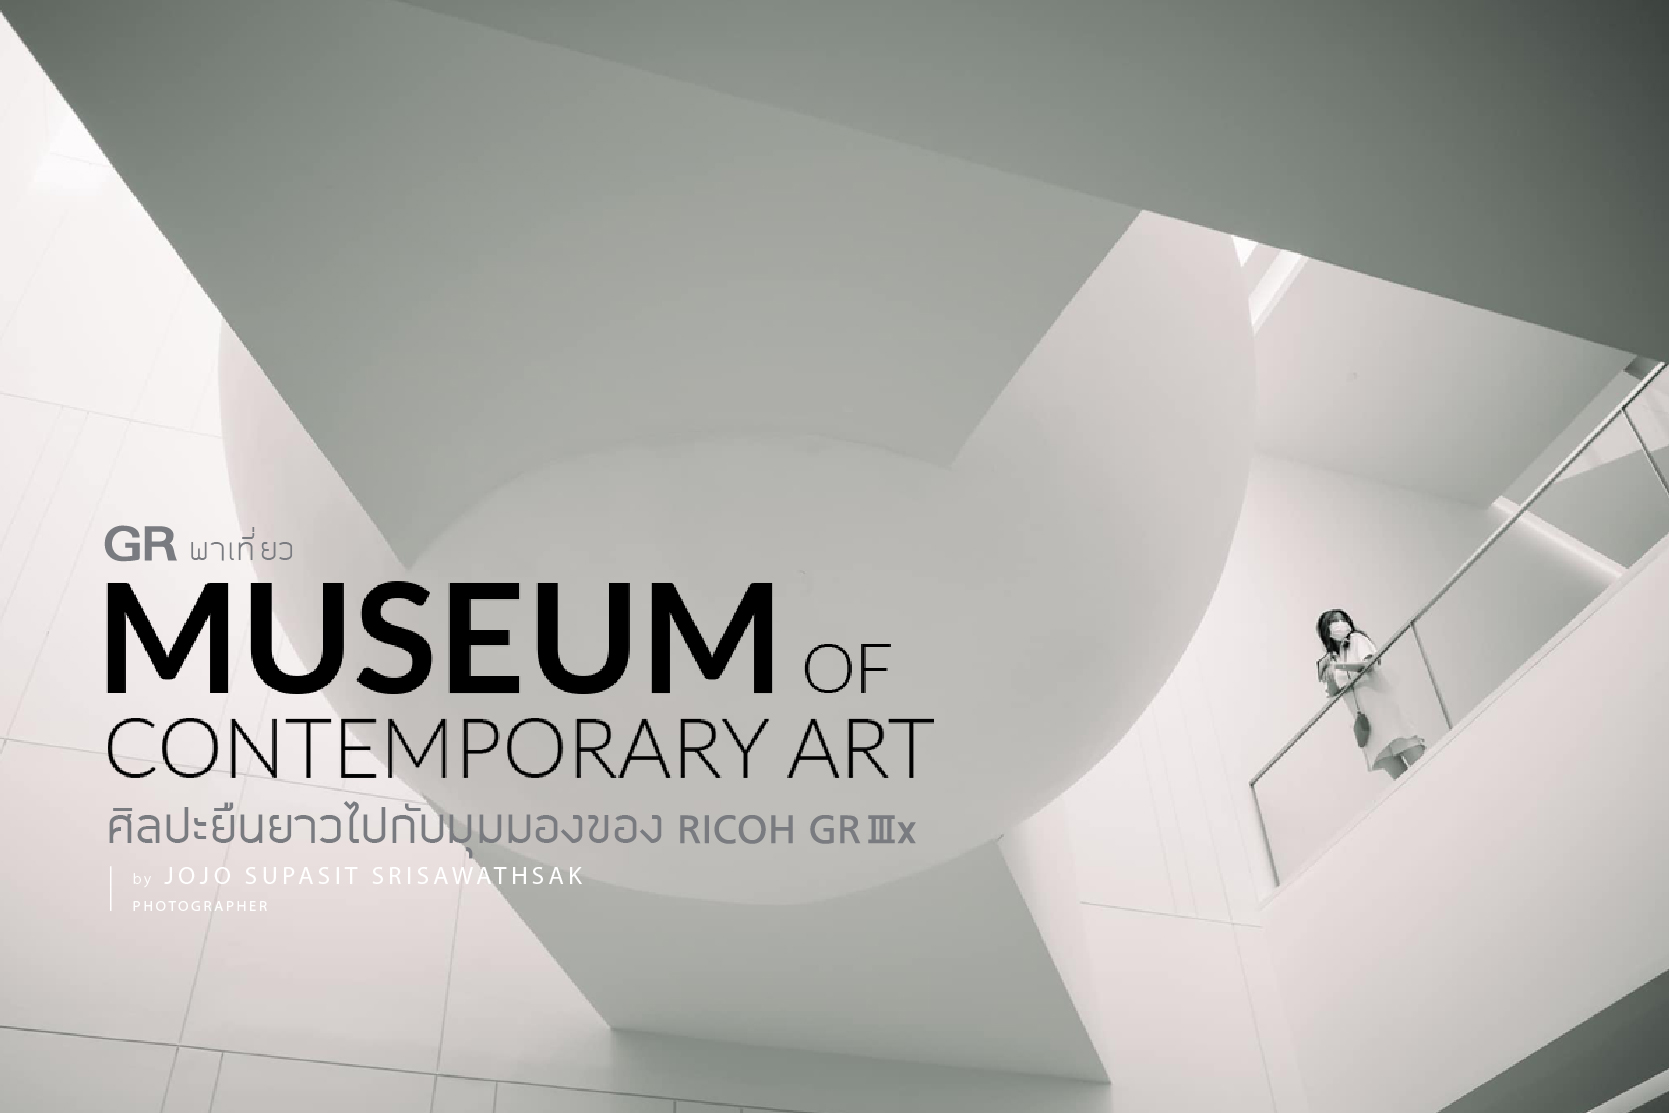 GR พาเที่ยว… MUSEUM OF CONTEMPORARY ART ศิลปะยืนยาวไปกับมุมมองของ GRIIIx by Supasit Srisawathsak